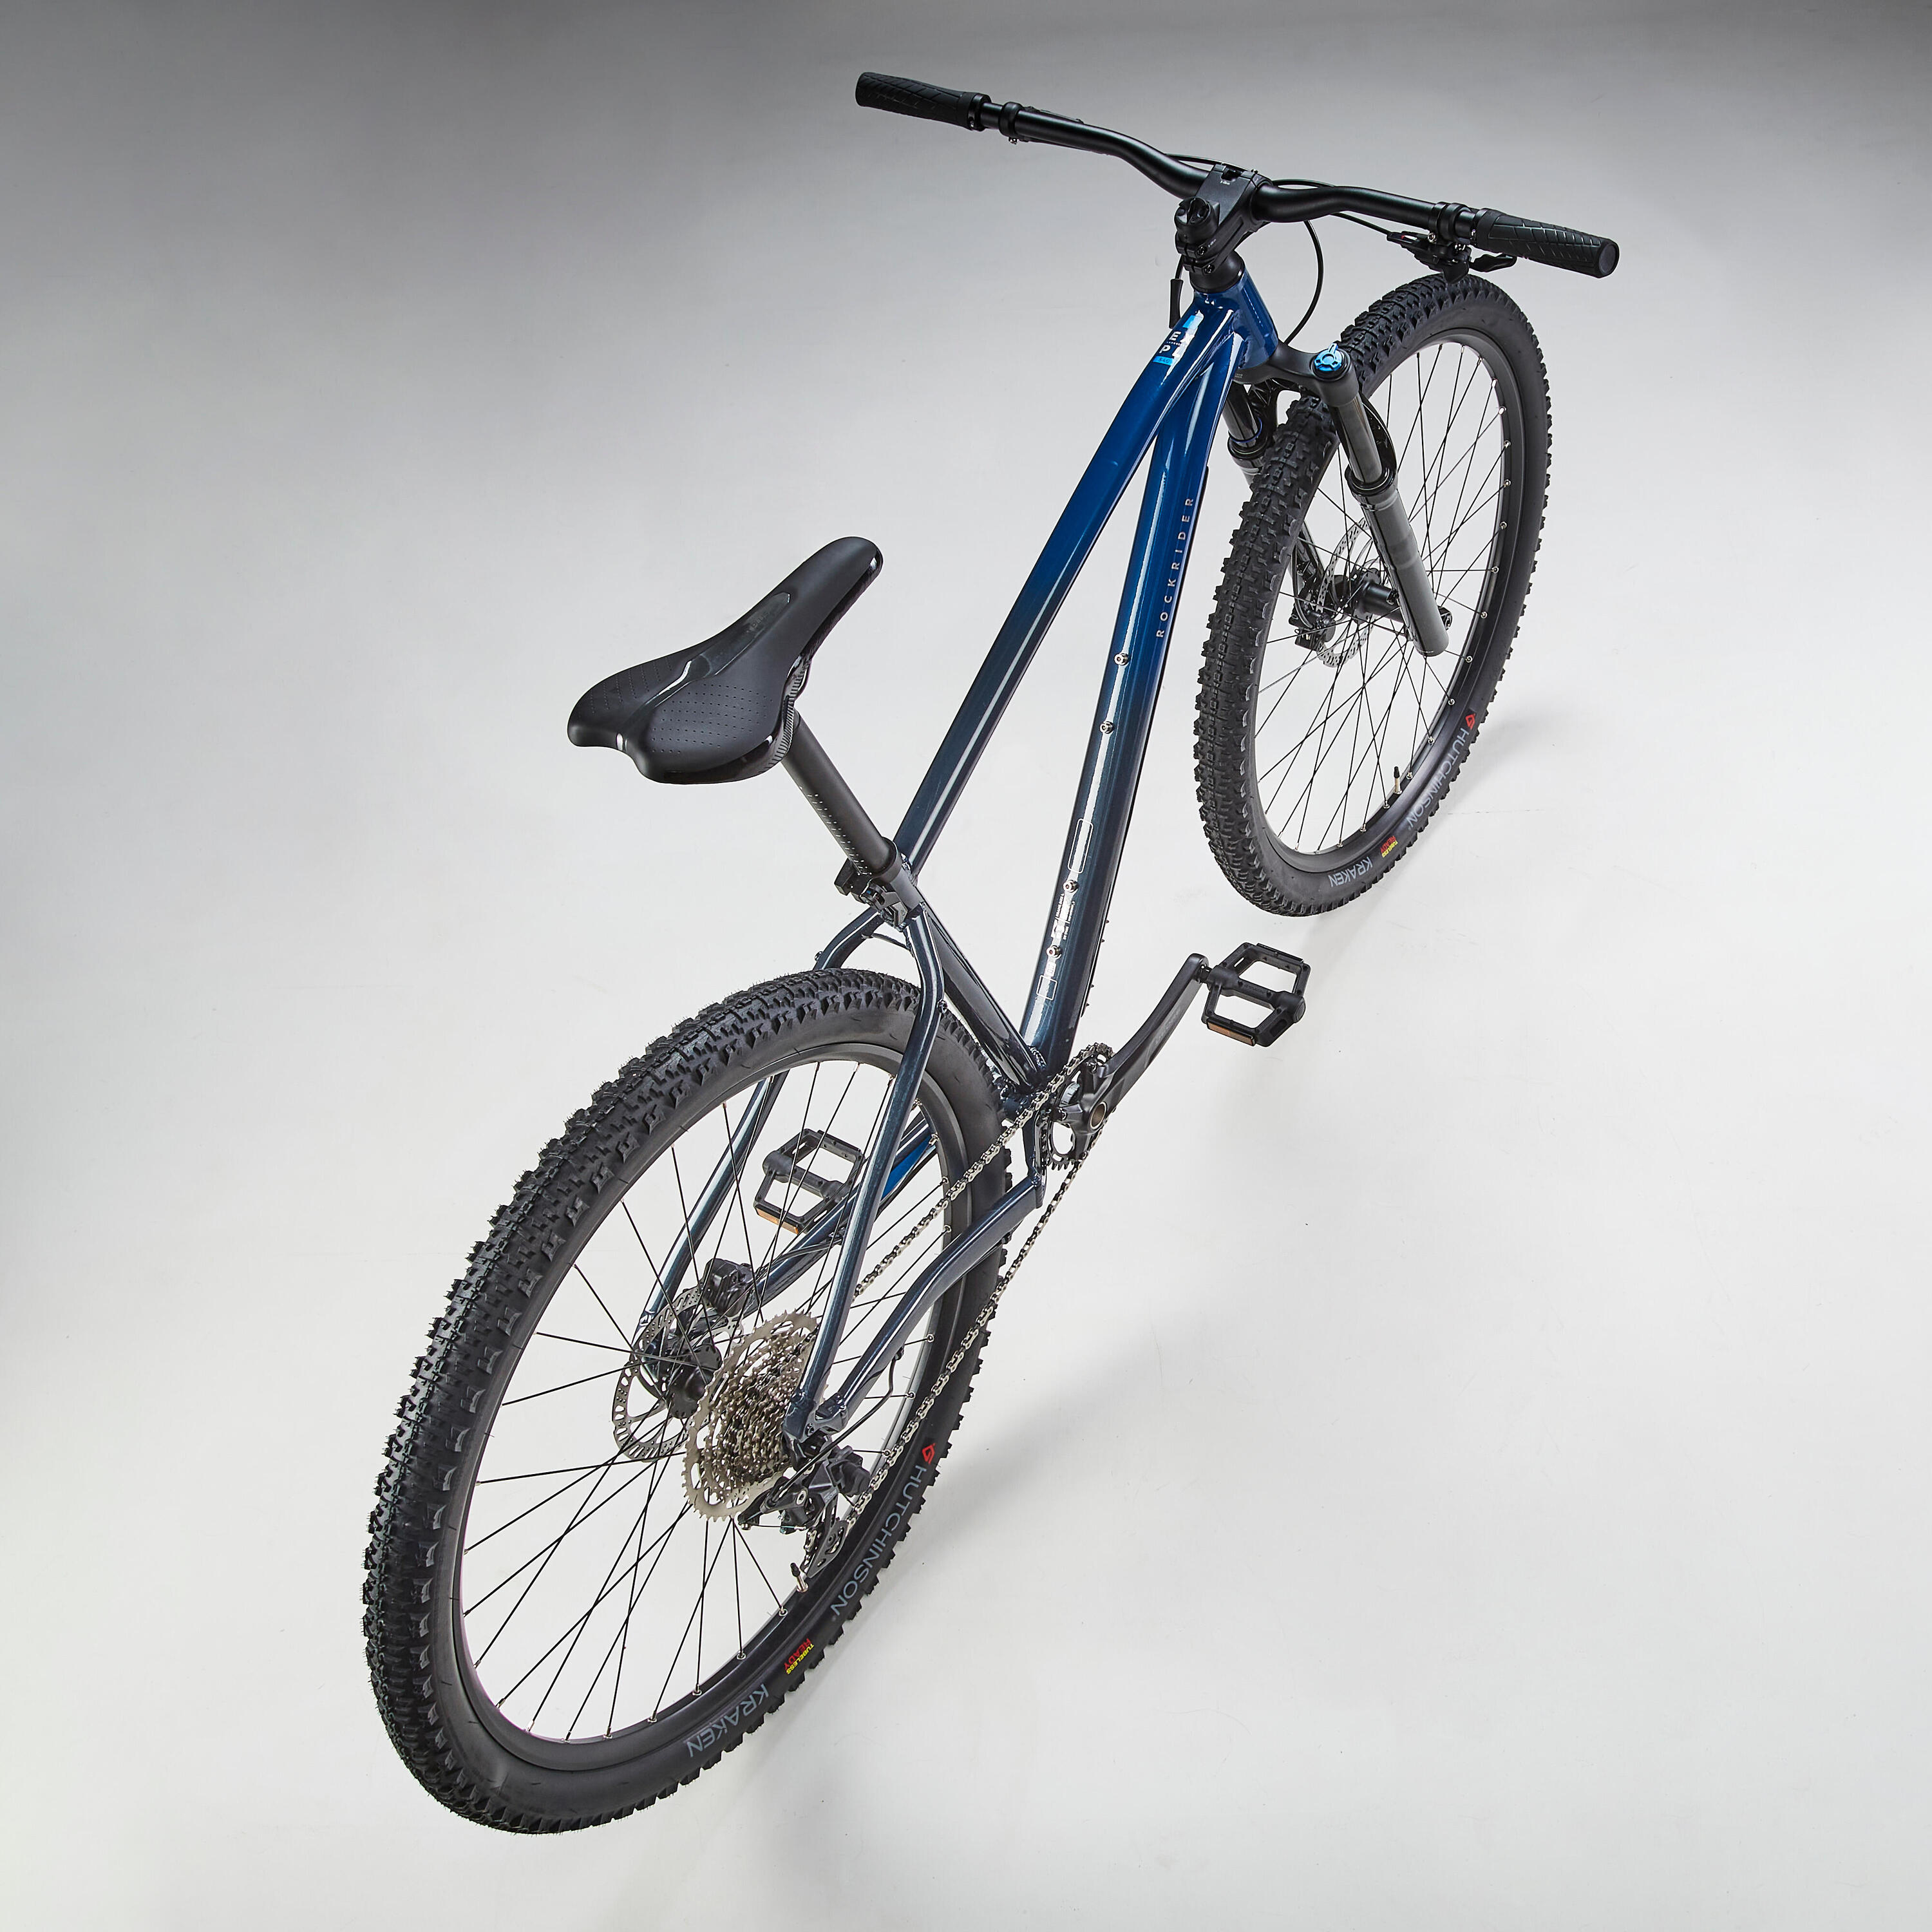 29" Touring Mountain Bike Explore 540 - Blue/Black 6/13